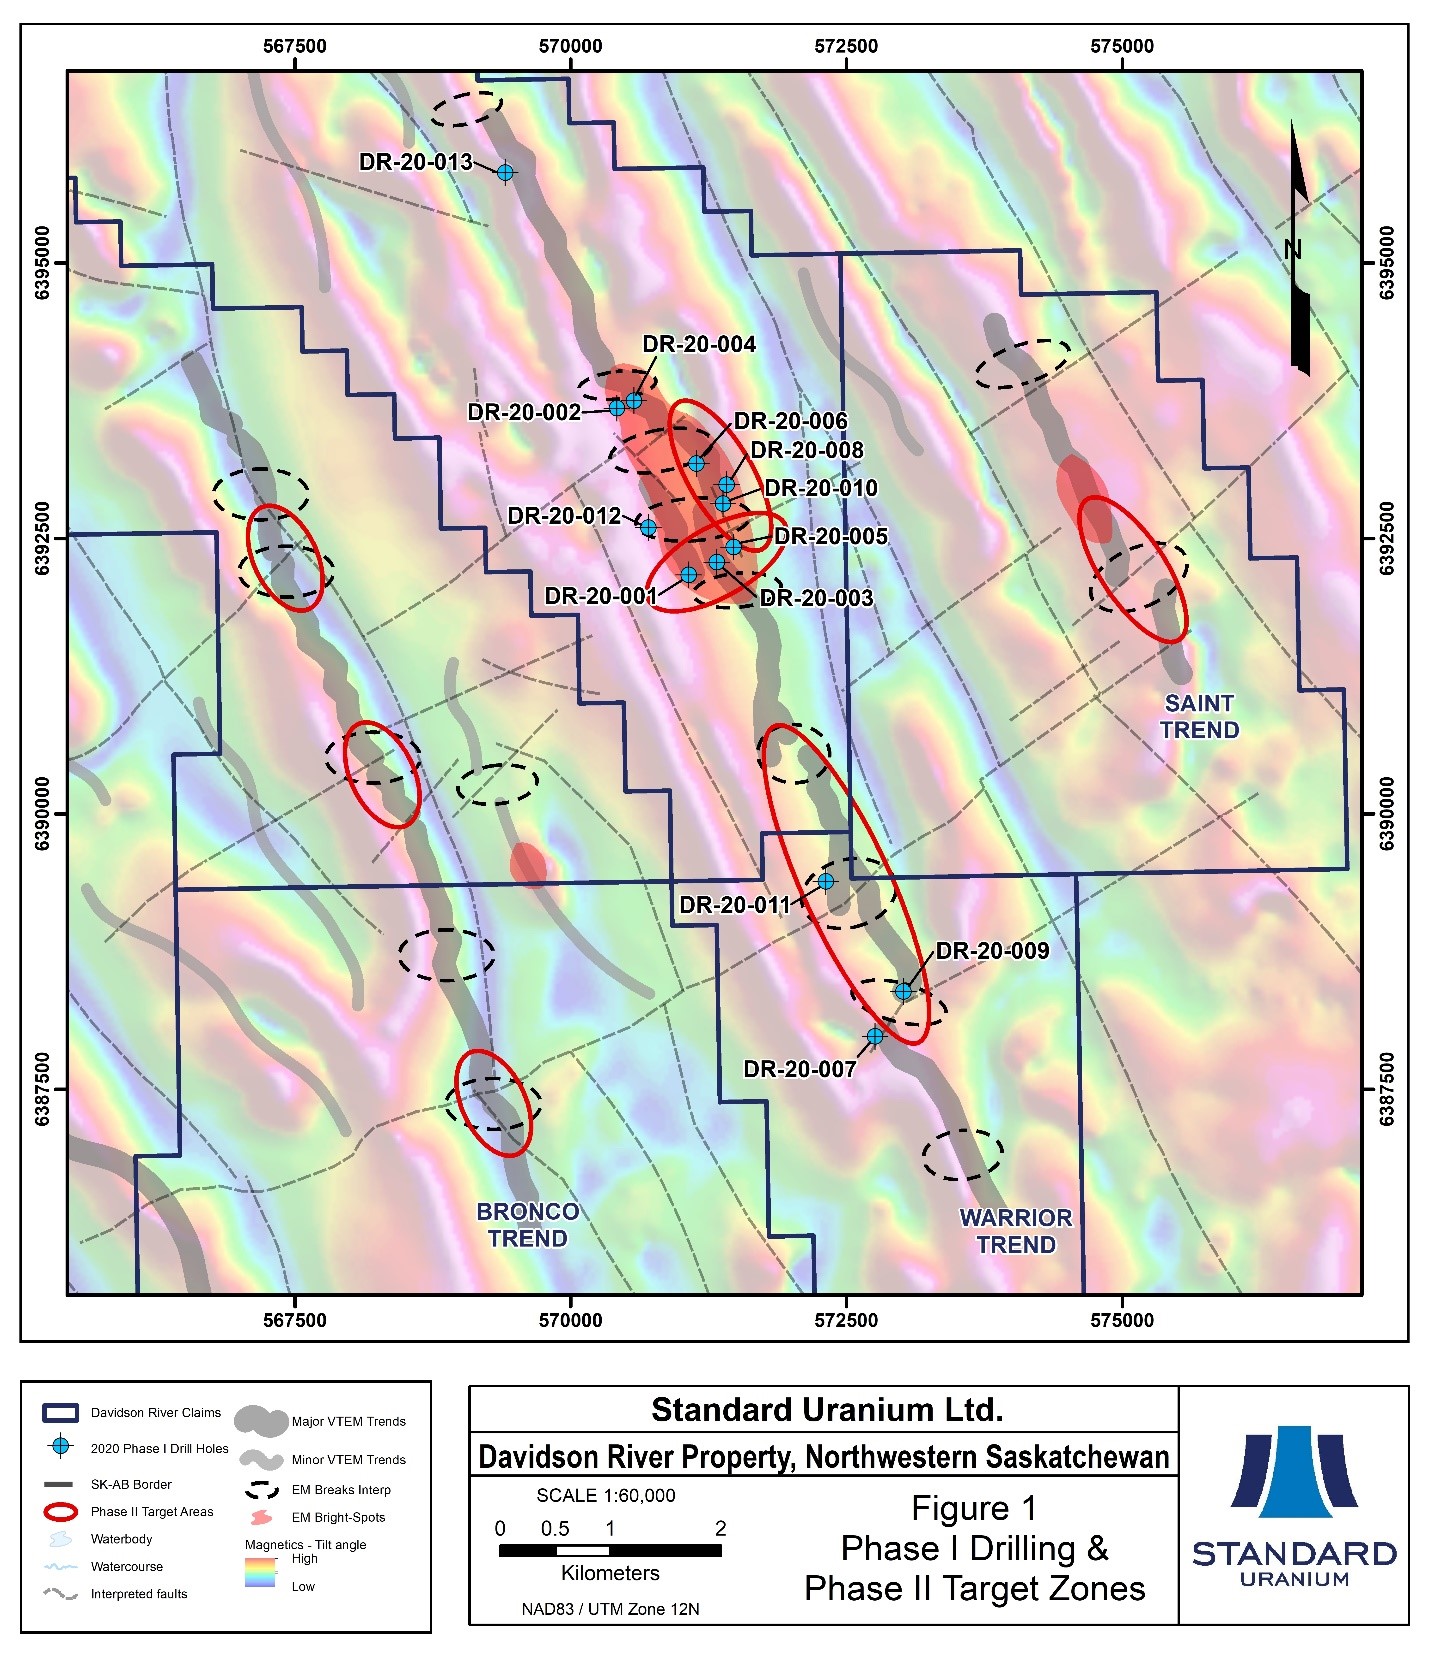 Figure 1: Phase I Drilling & Phase II Target Zones